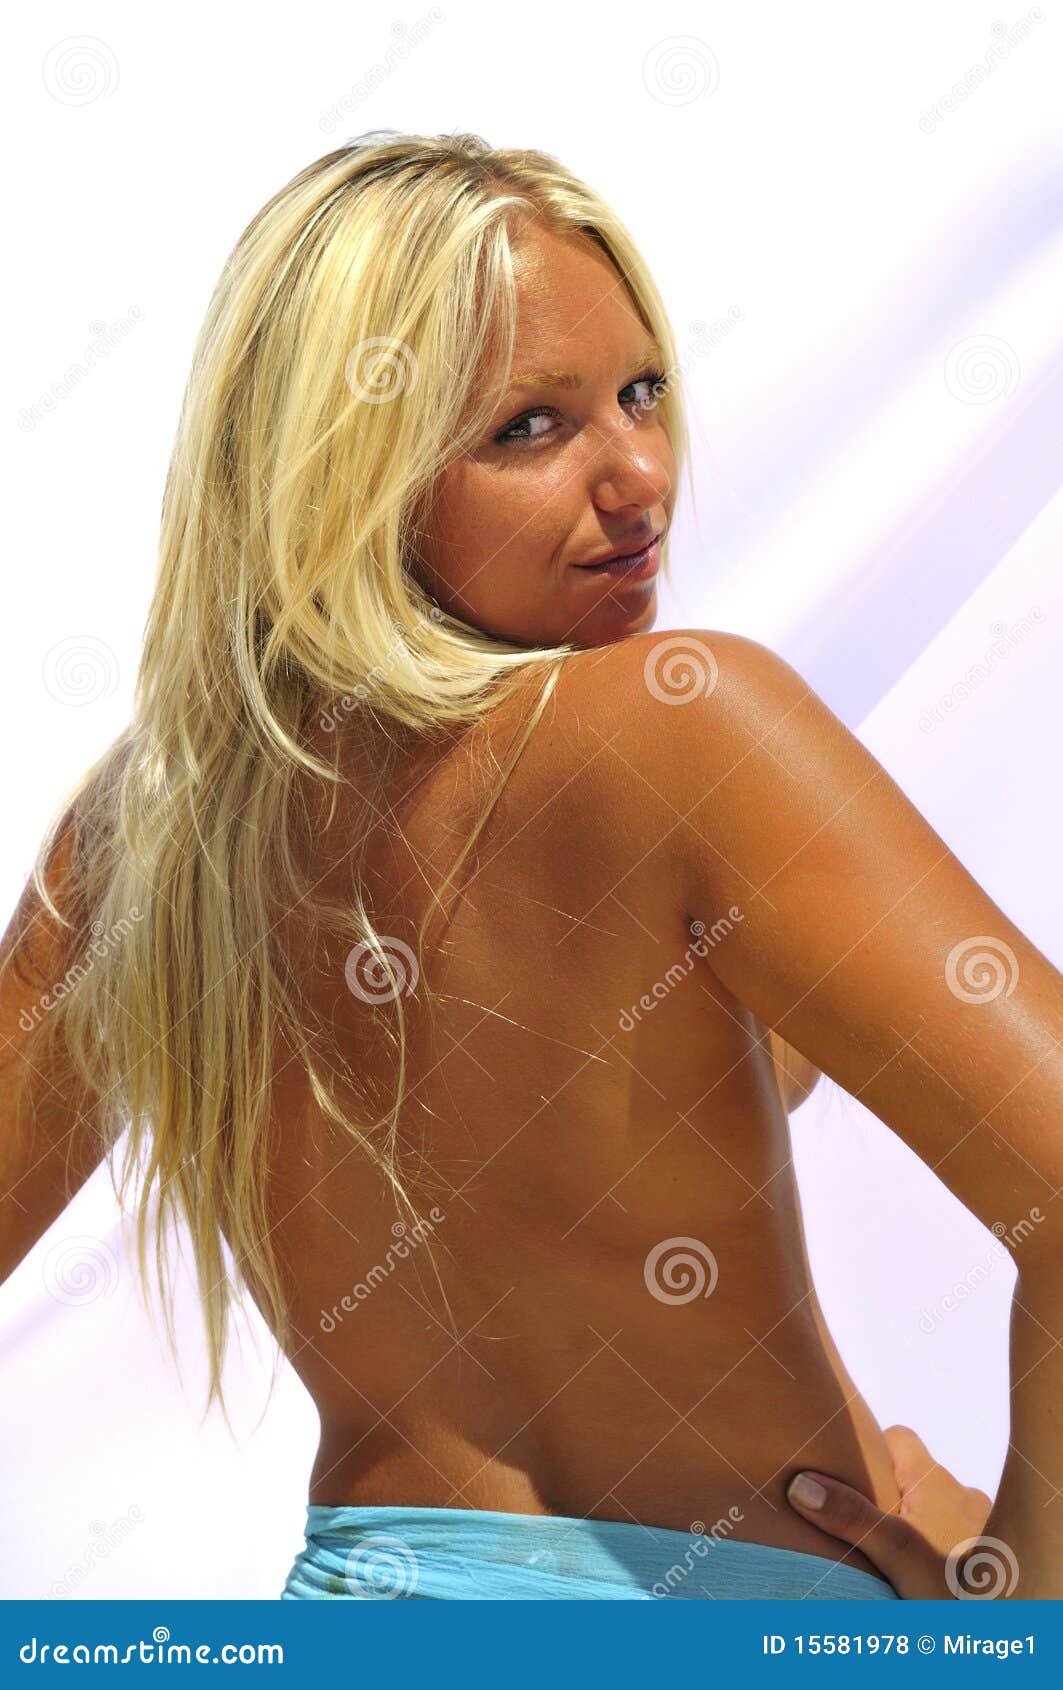 blonde girl with even suntan